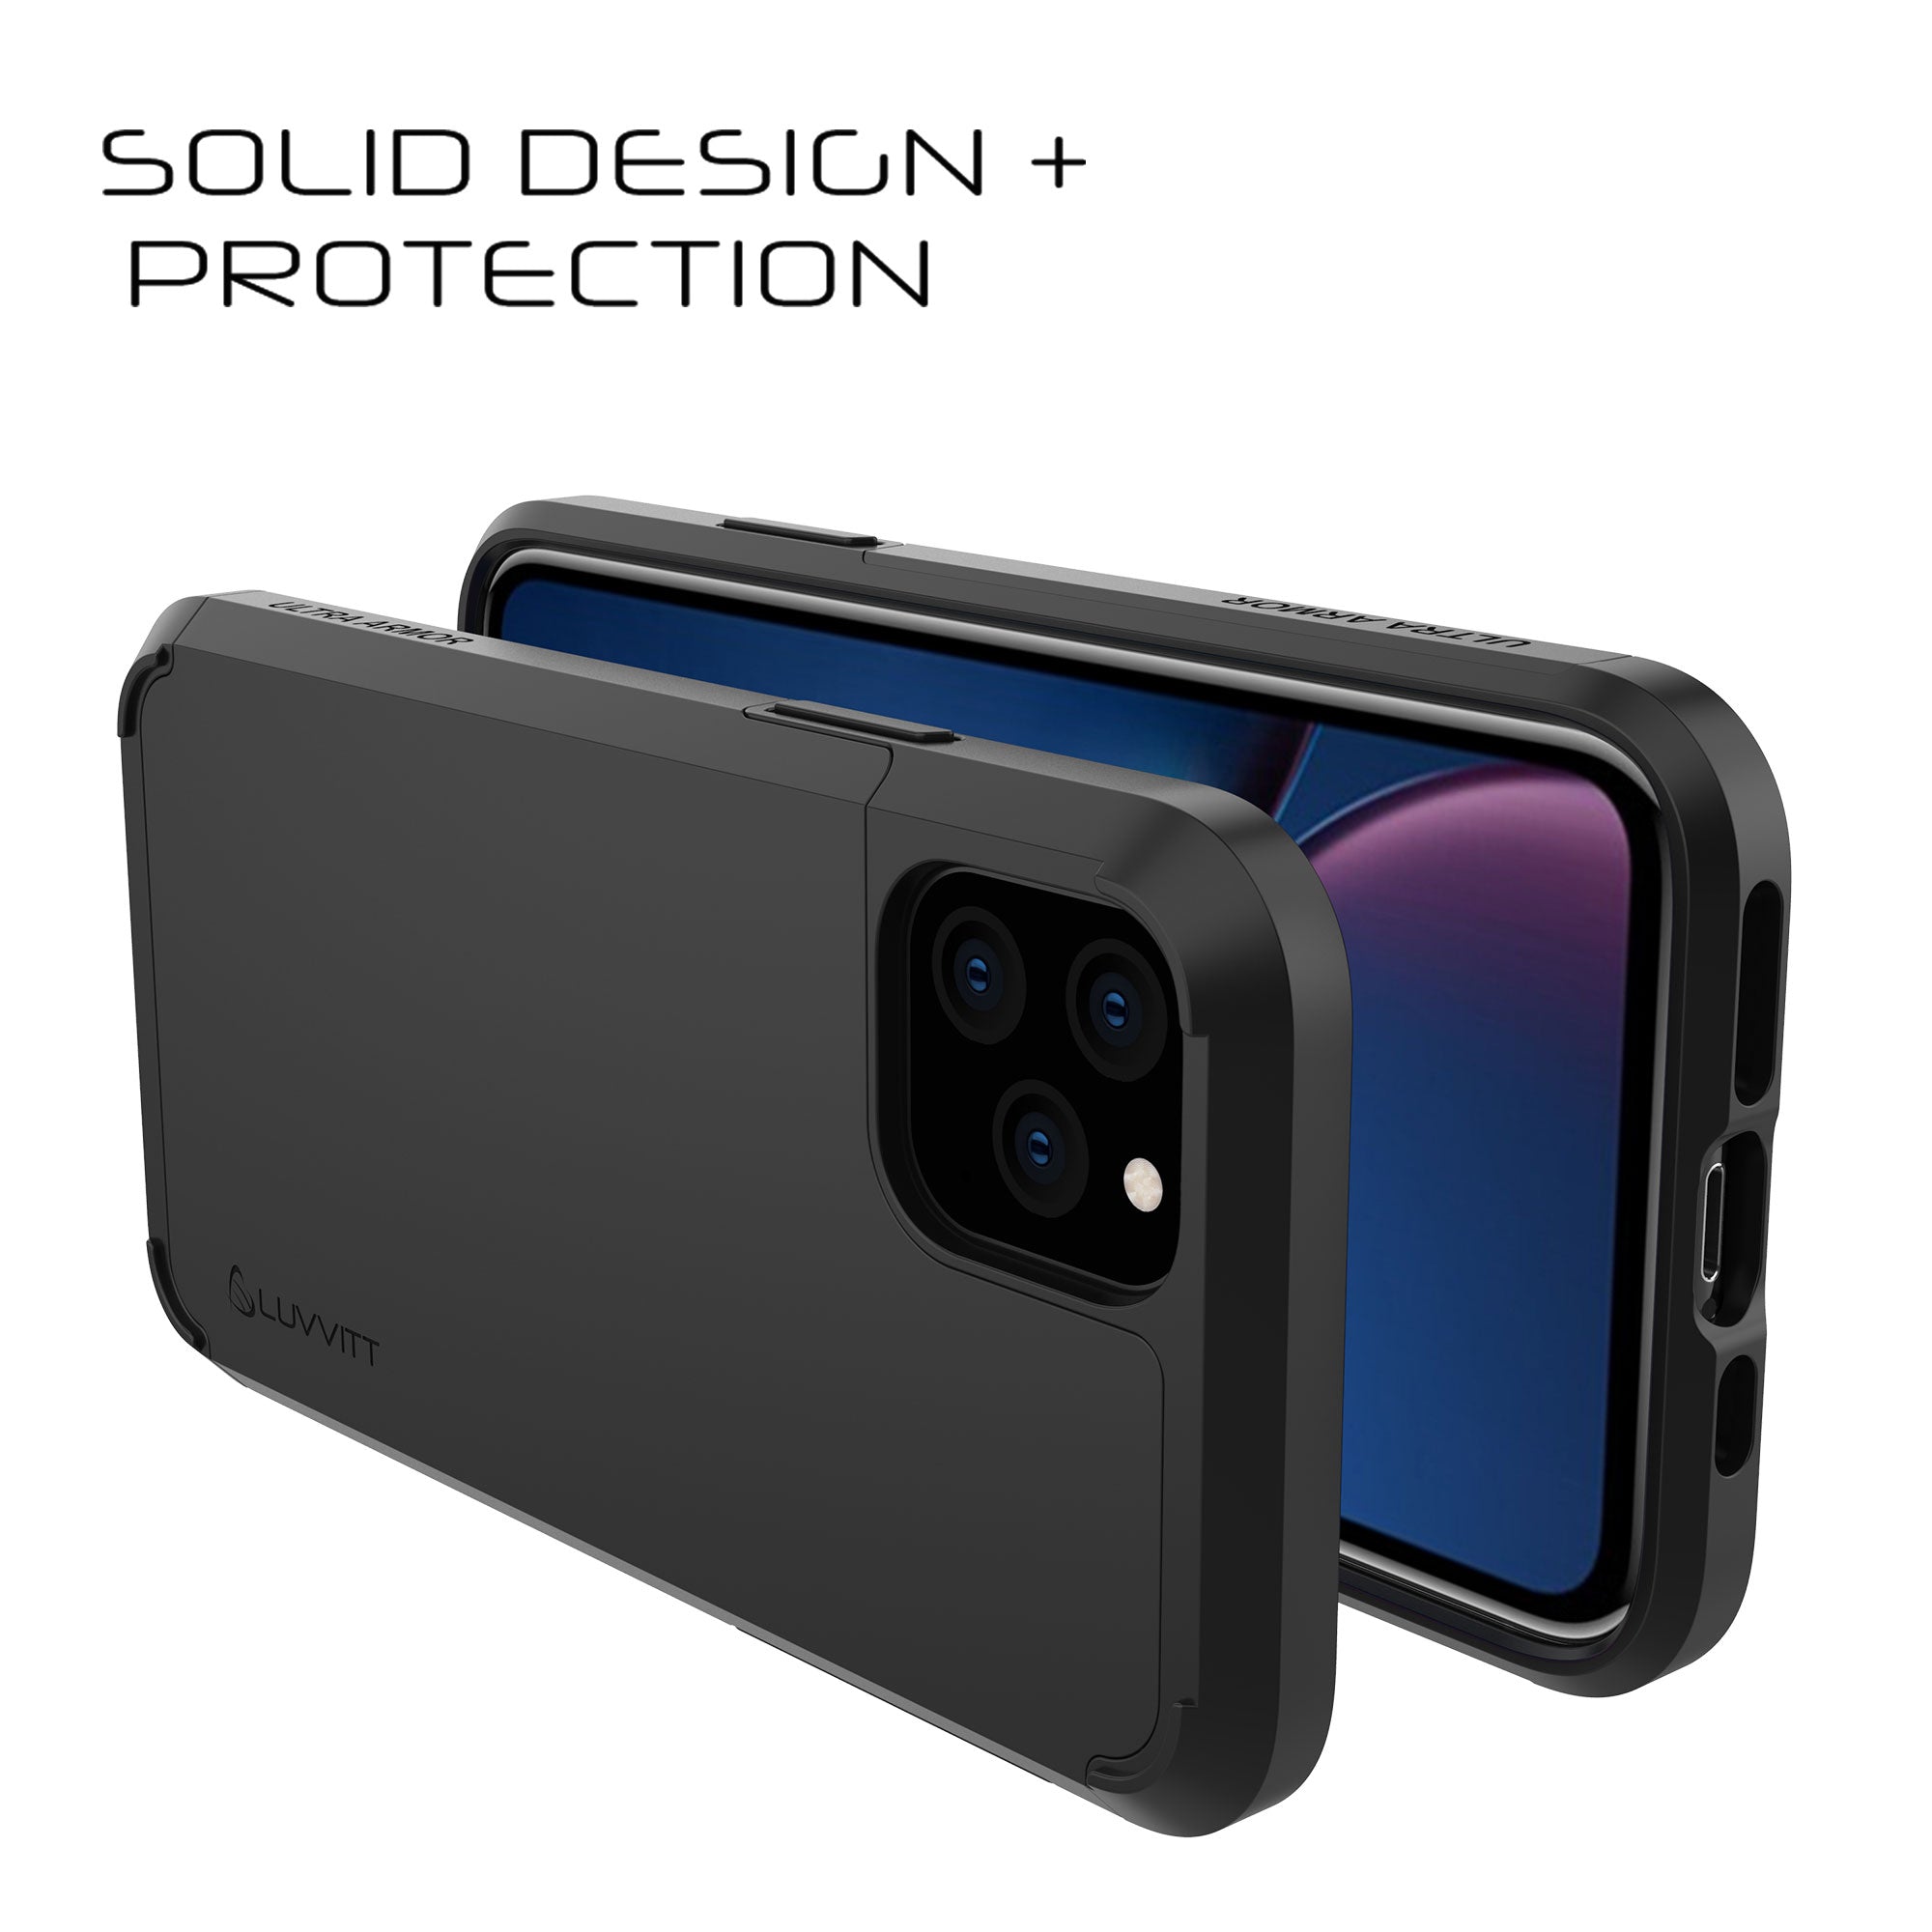 Luvvitt $250 Warranty ULTRA ARMOR Case + Liquid Glass Screen Protector Bundle for iPhone 11 Pro Max 2019 - Black